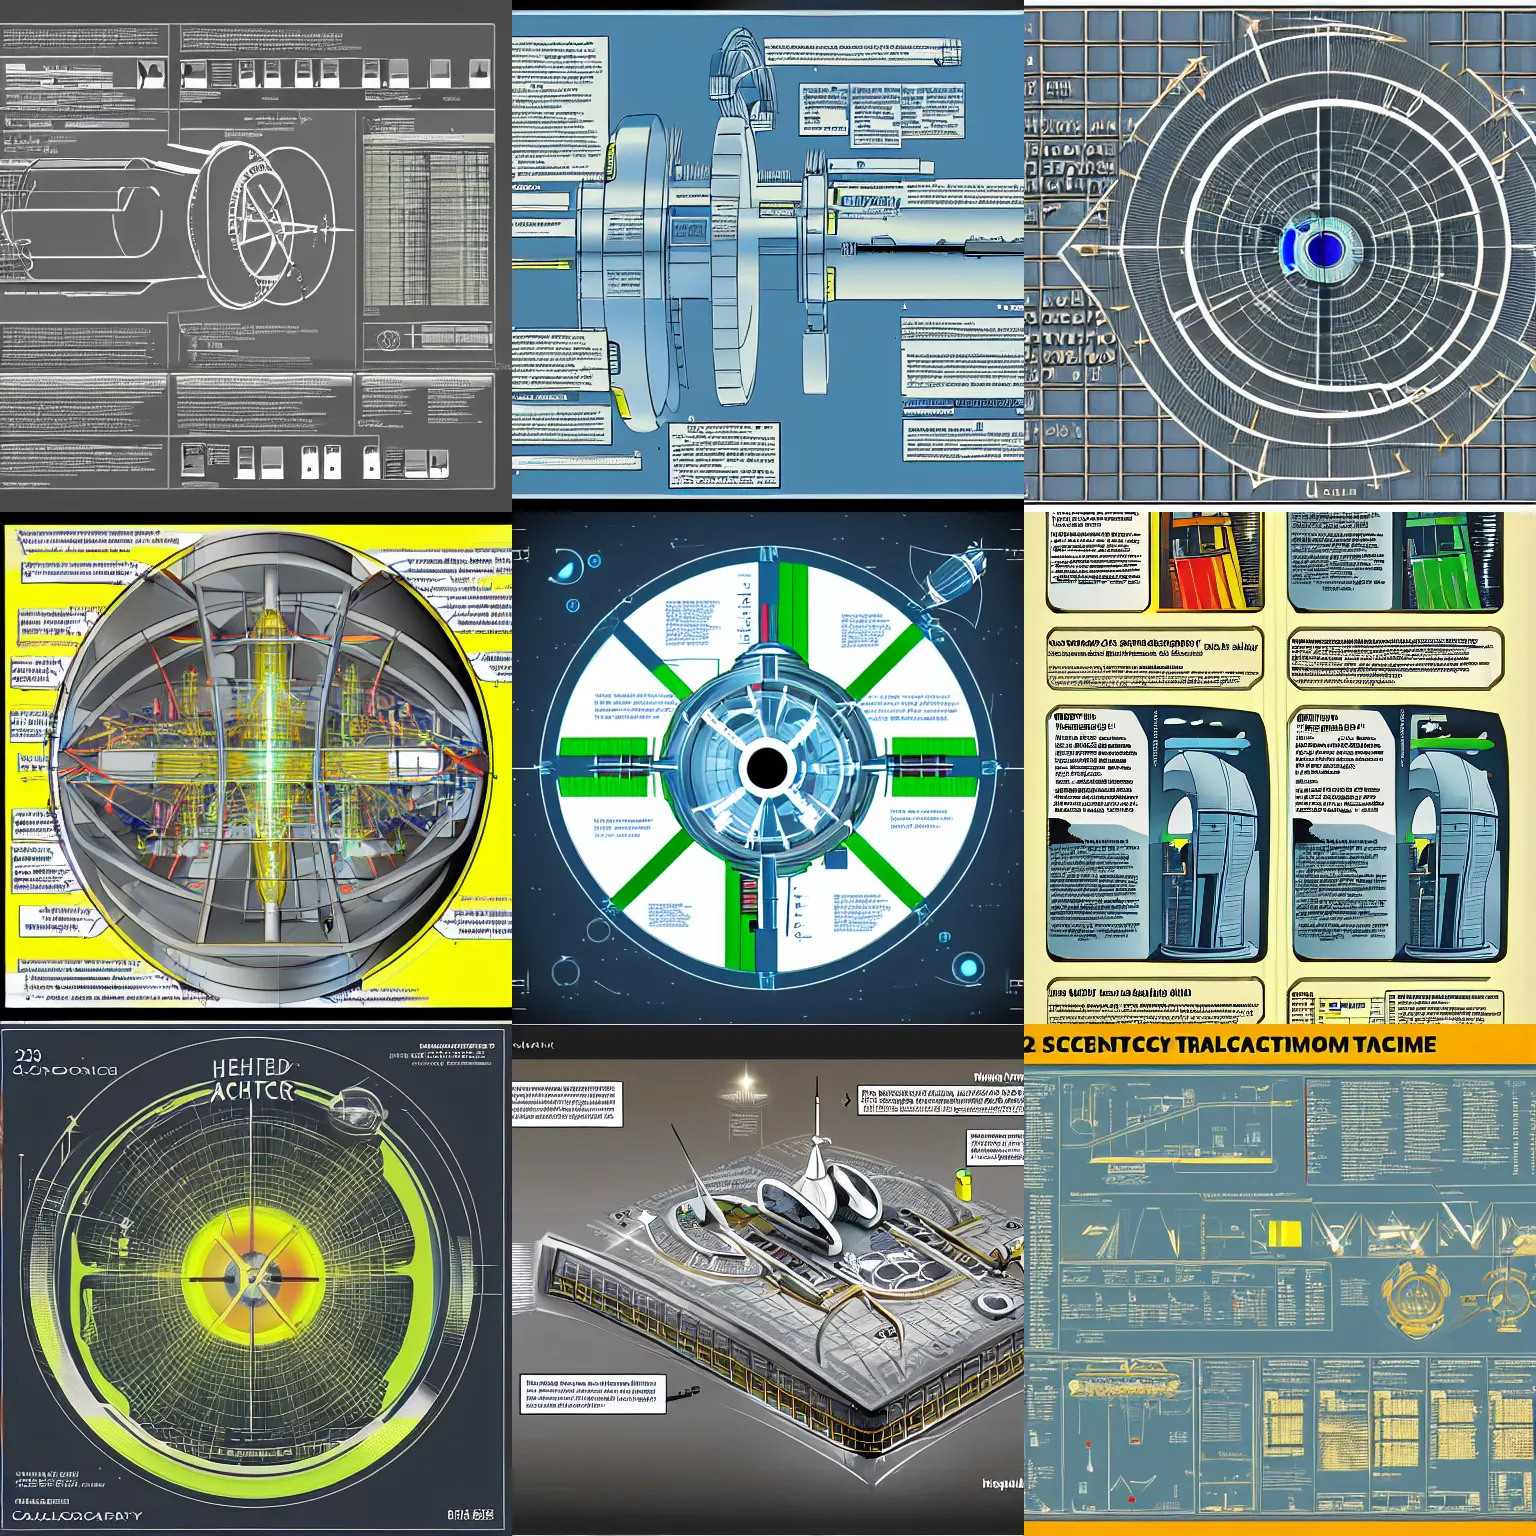 Prompt: 2 3 rd century scientific schematics for a nuclear time machine, vector technical documents, callouts, archviz, legend